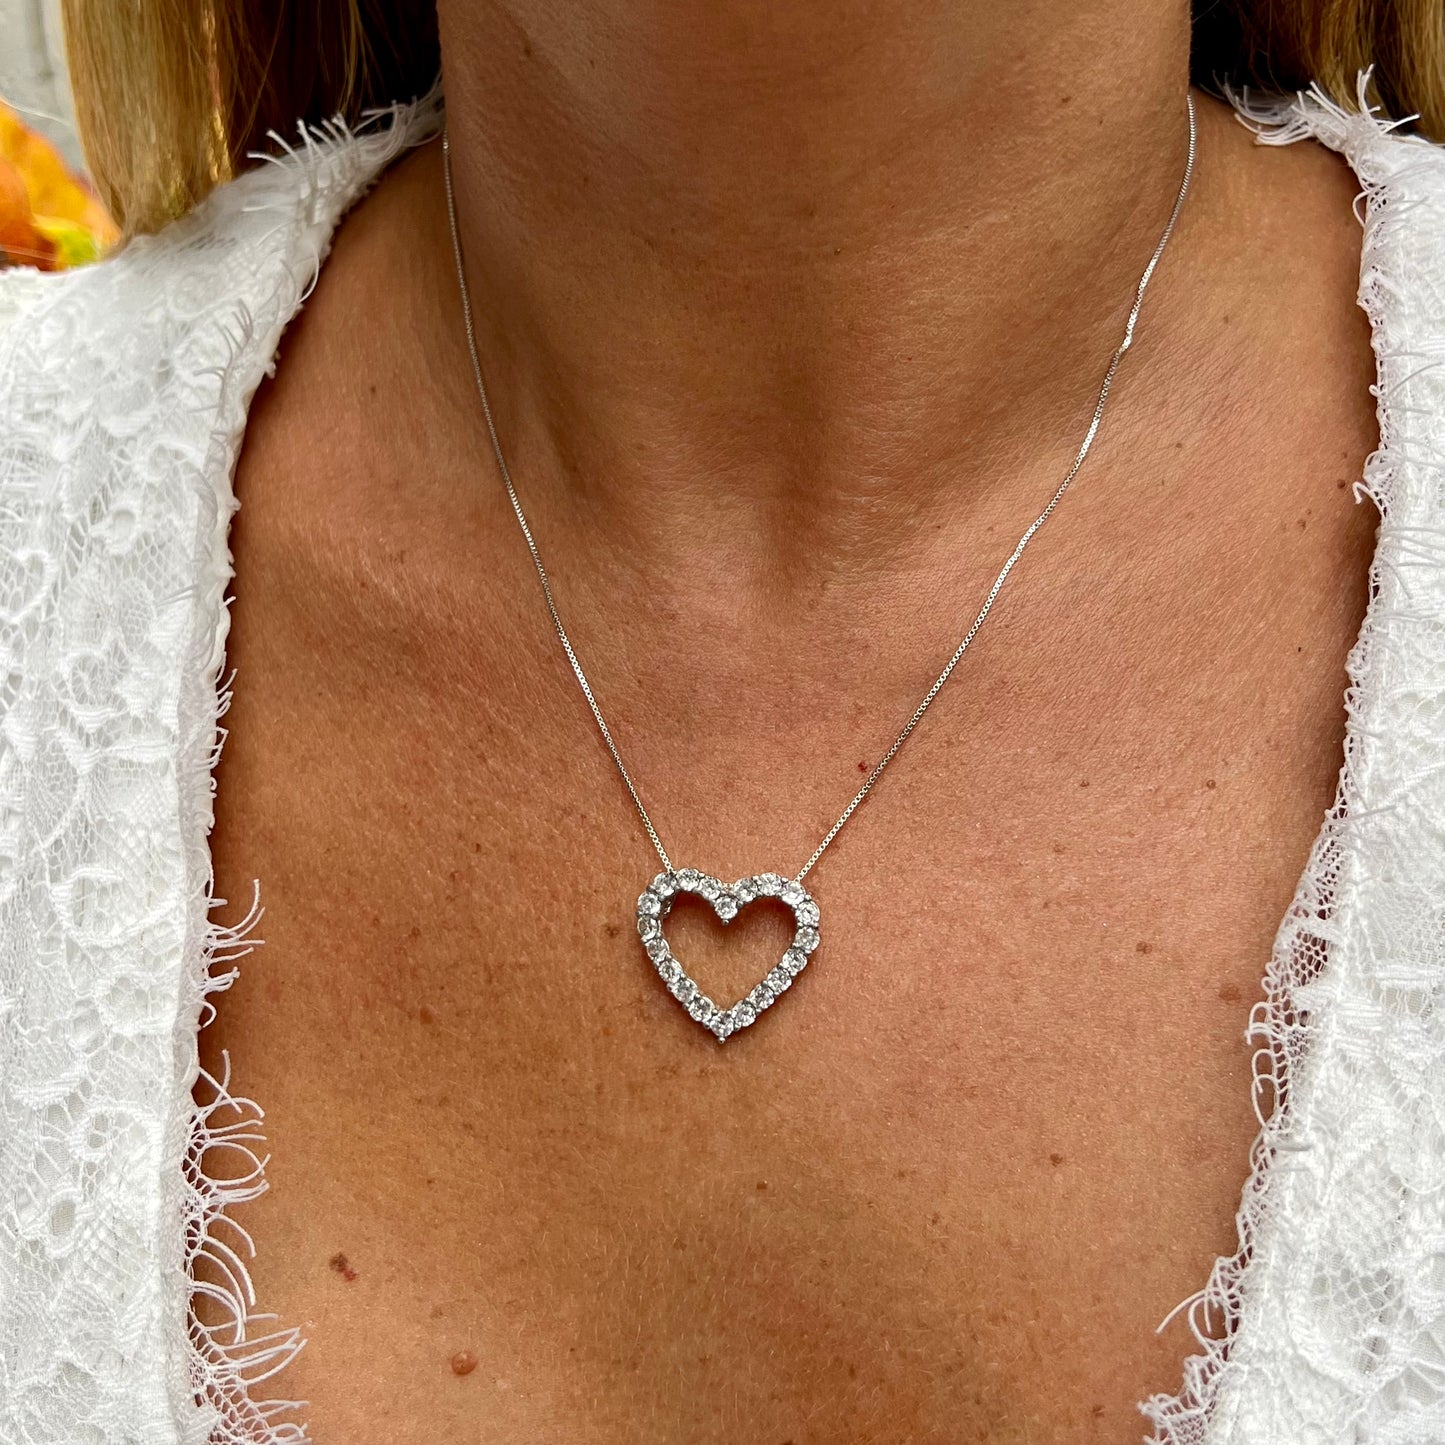 Heart Zirconia Necklace in Sterling Silver 925